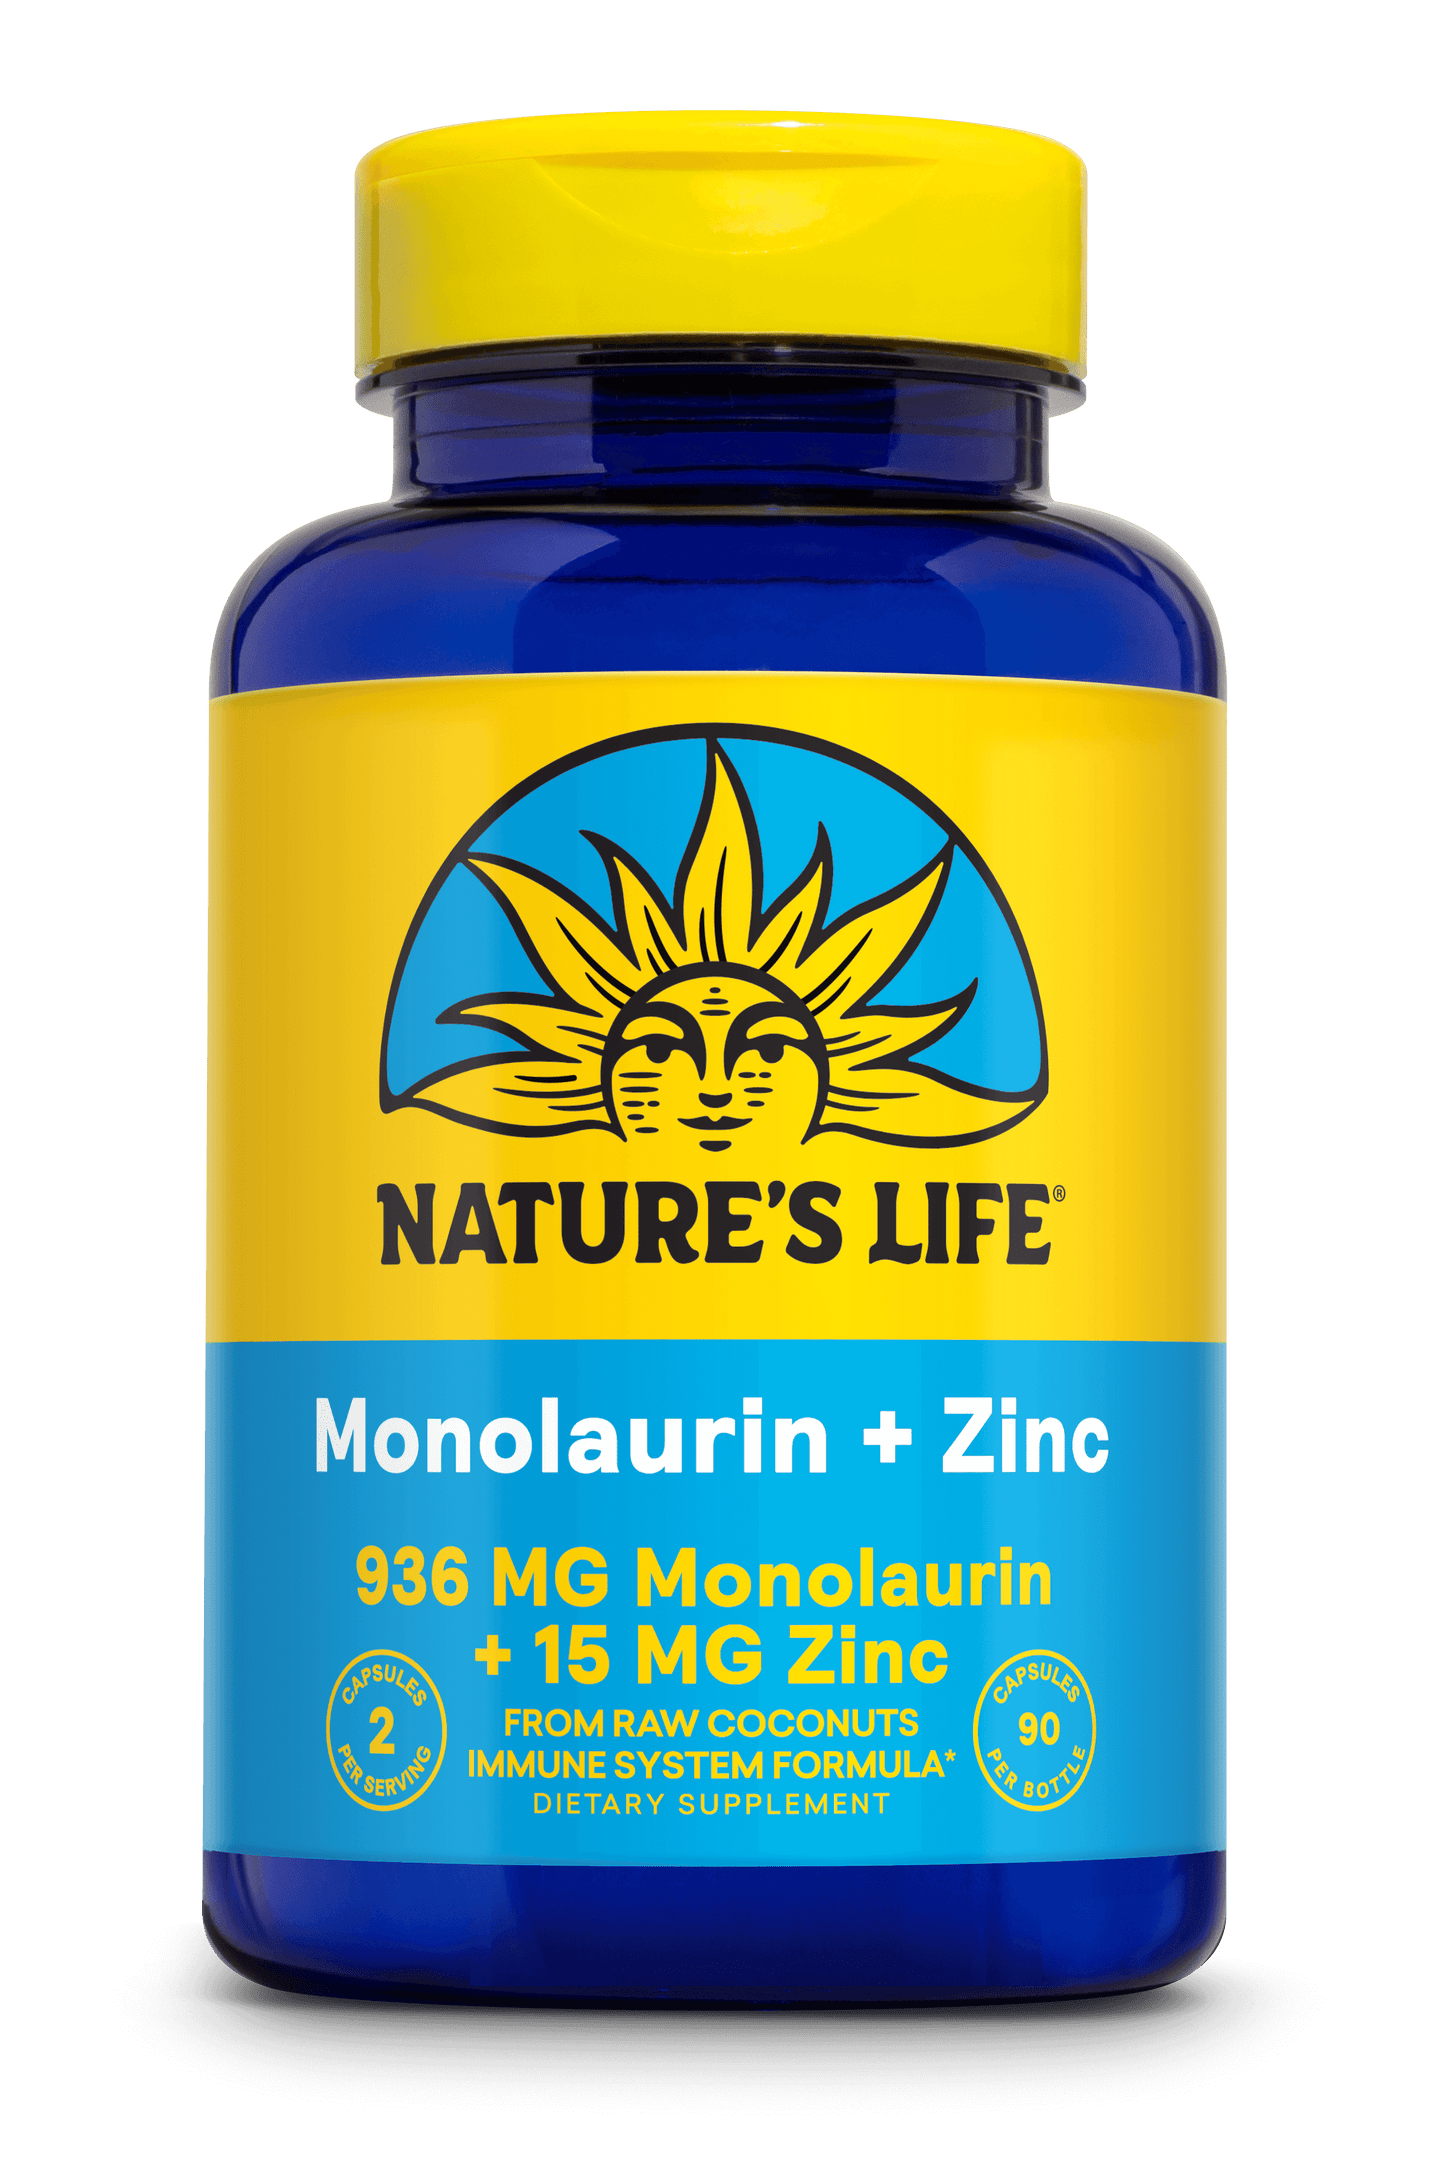 Monolaurin + Zinc